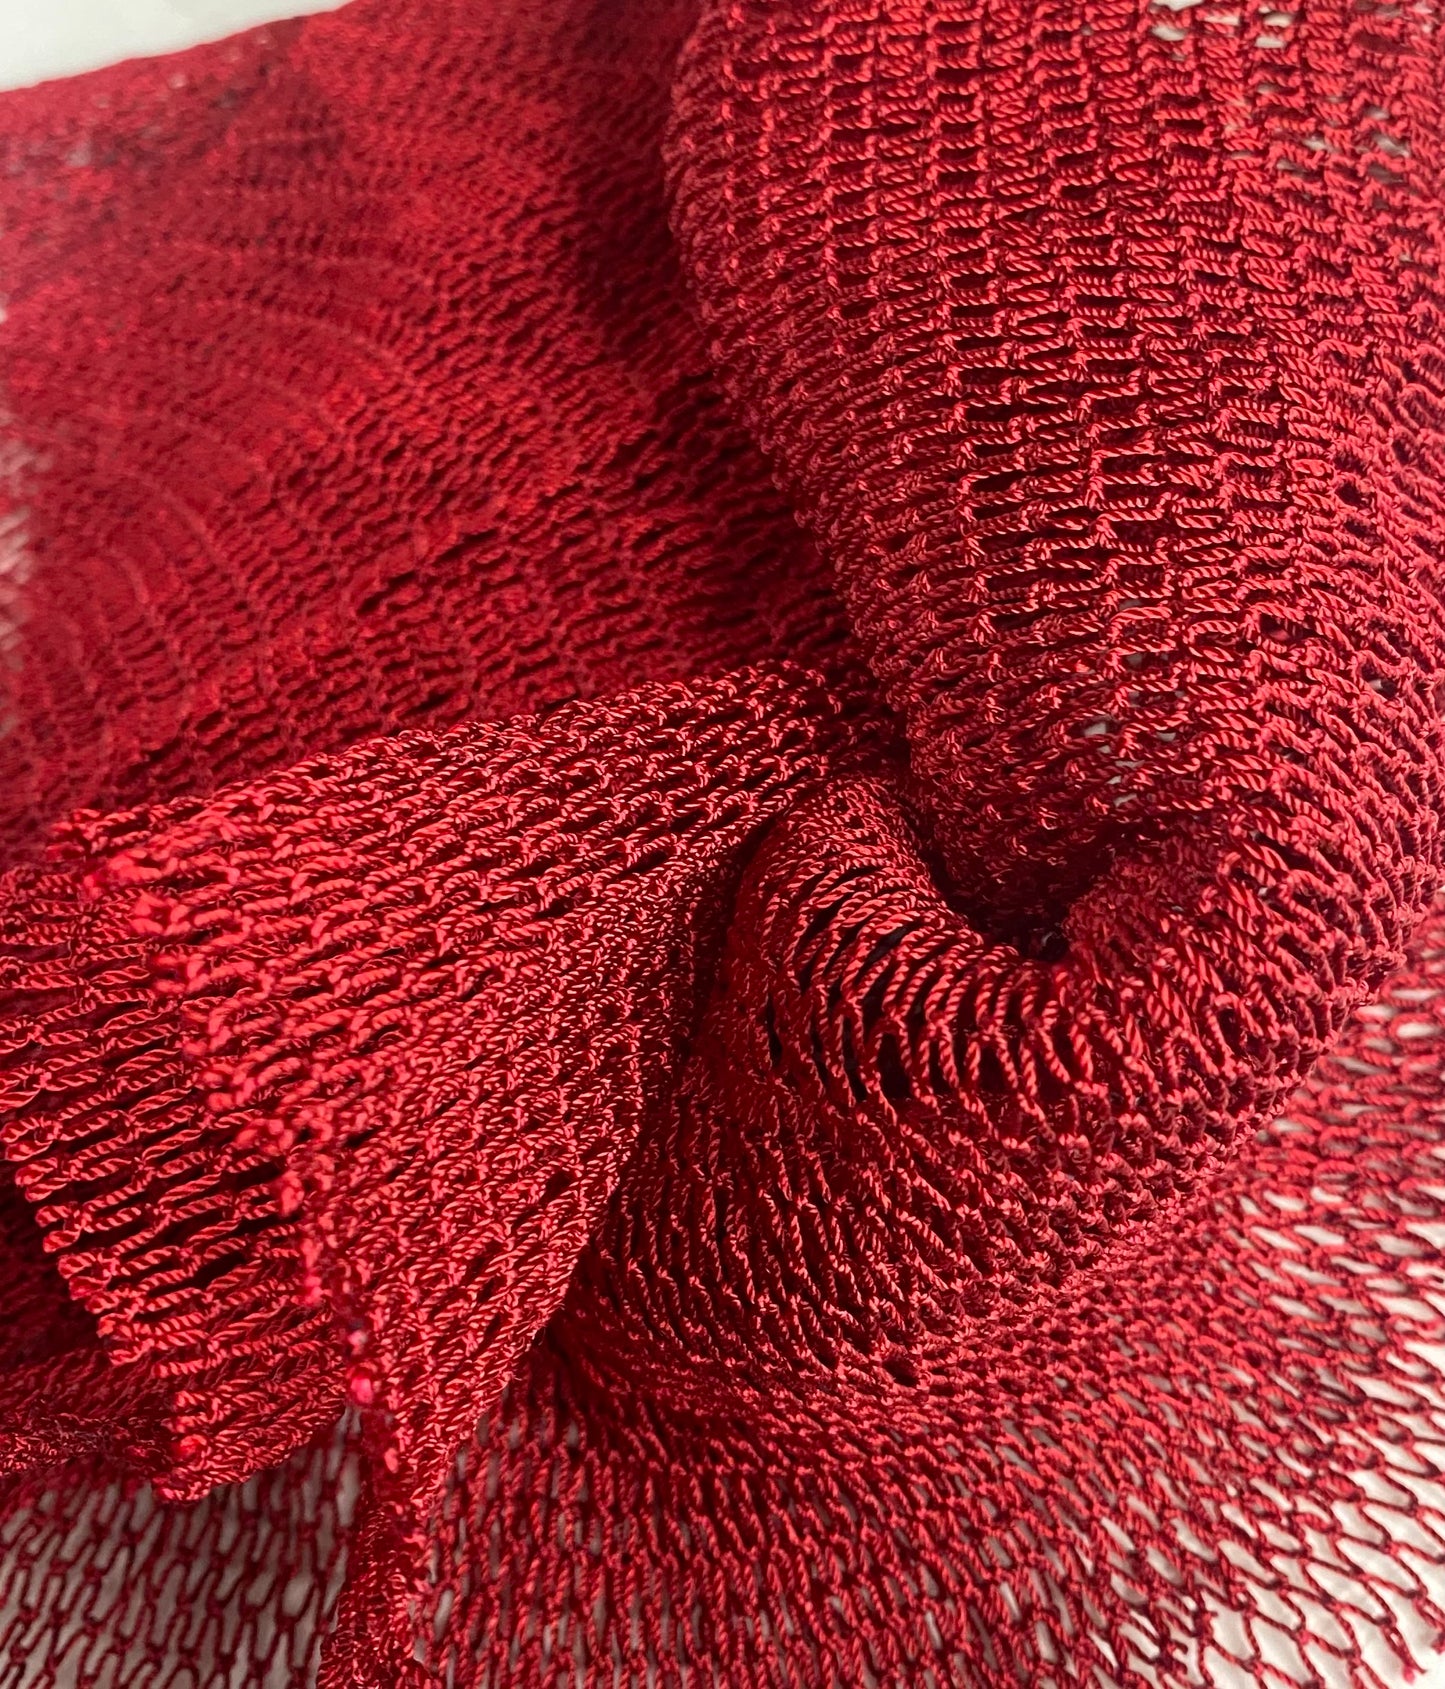 “Burgundy” mesh net